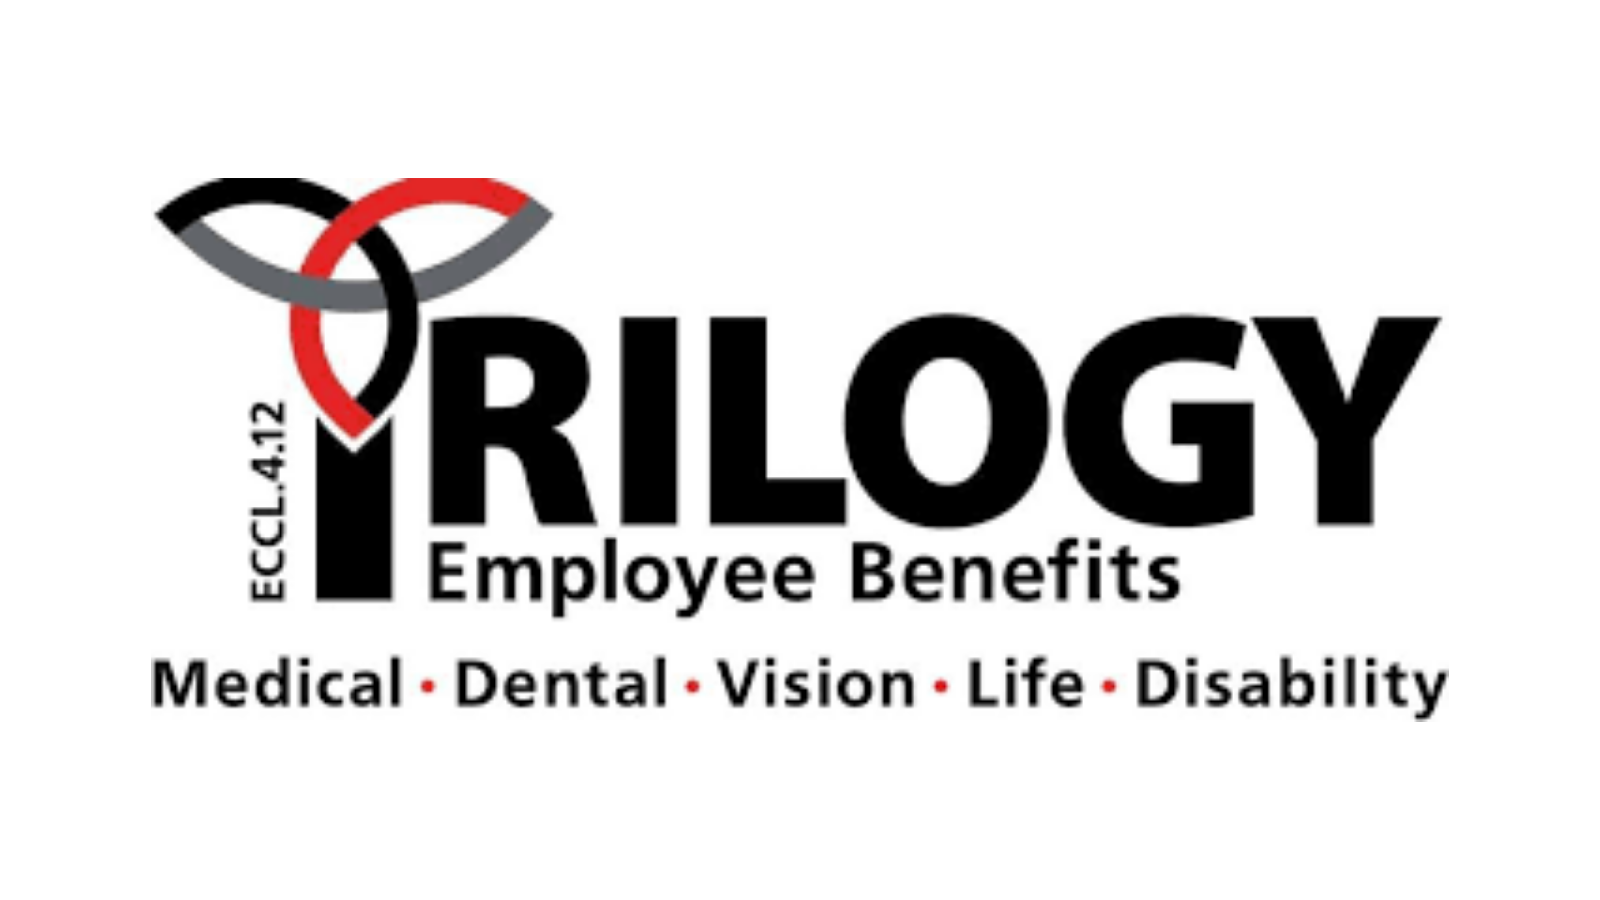 Trilogy Employee Benefits